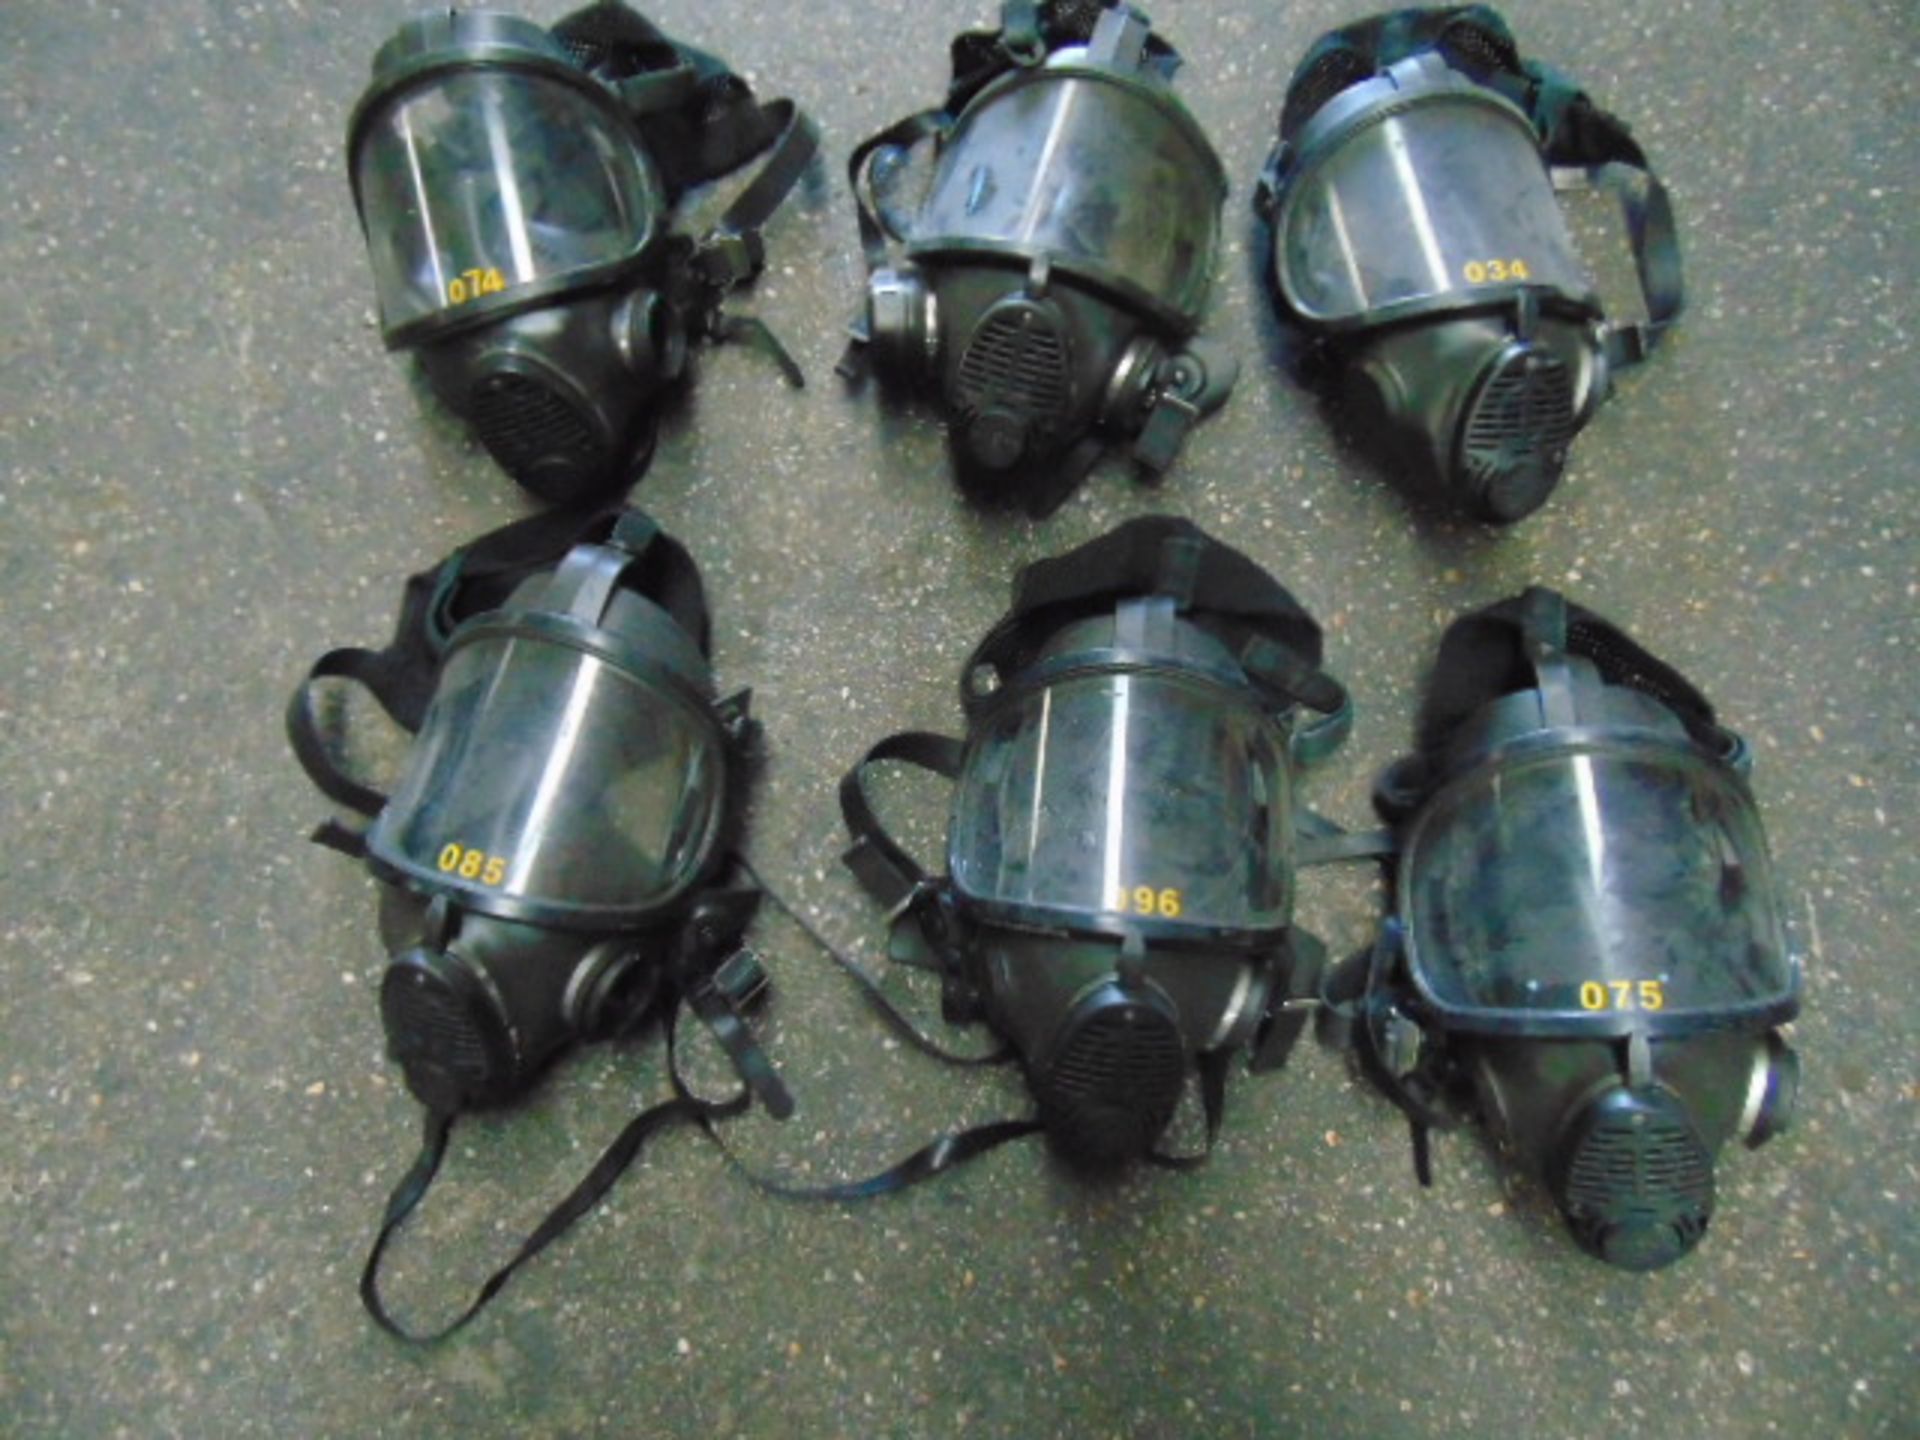 6 x Breathing Apparatus Masks